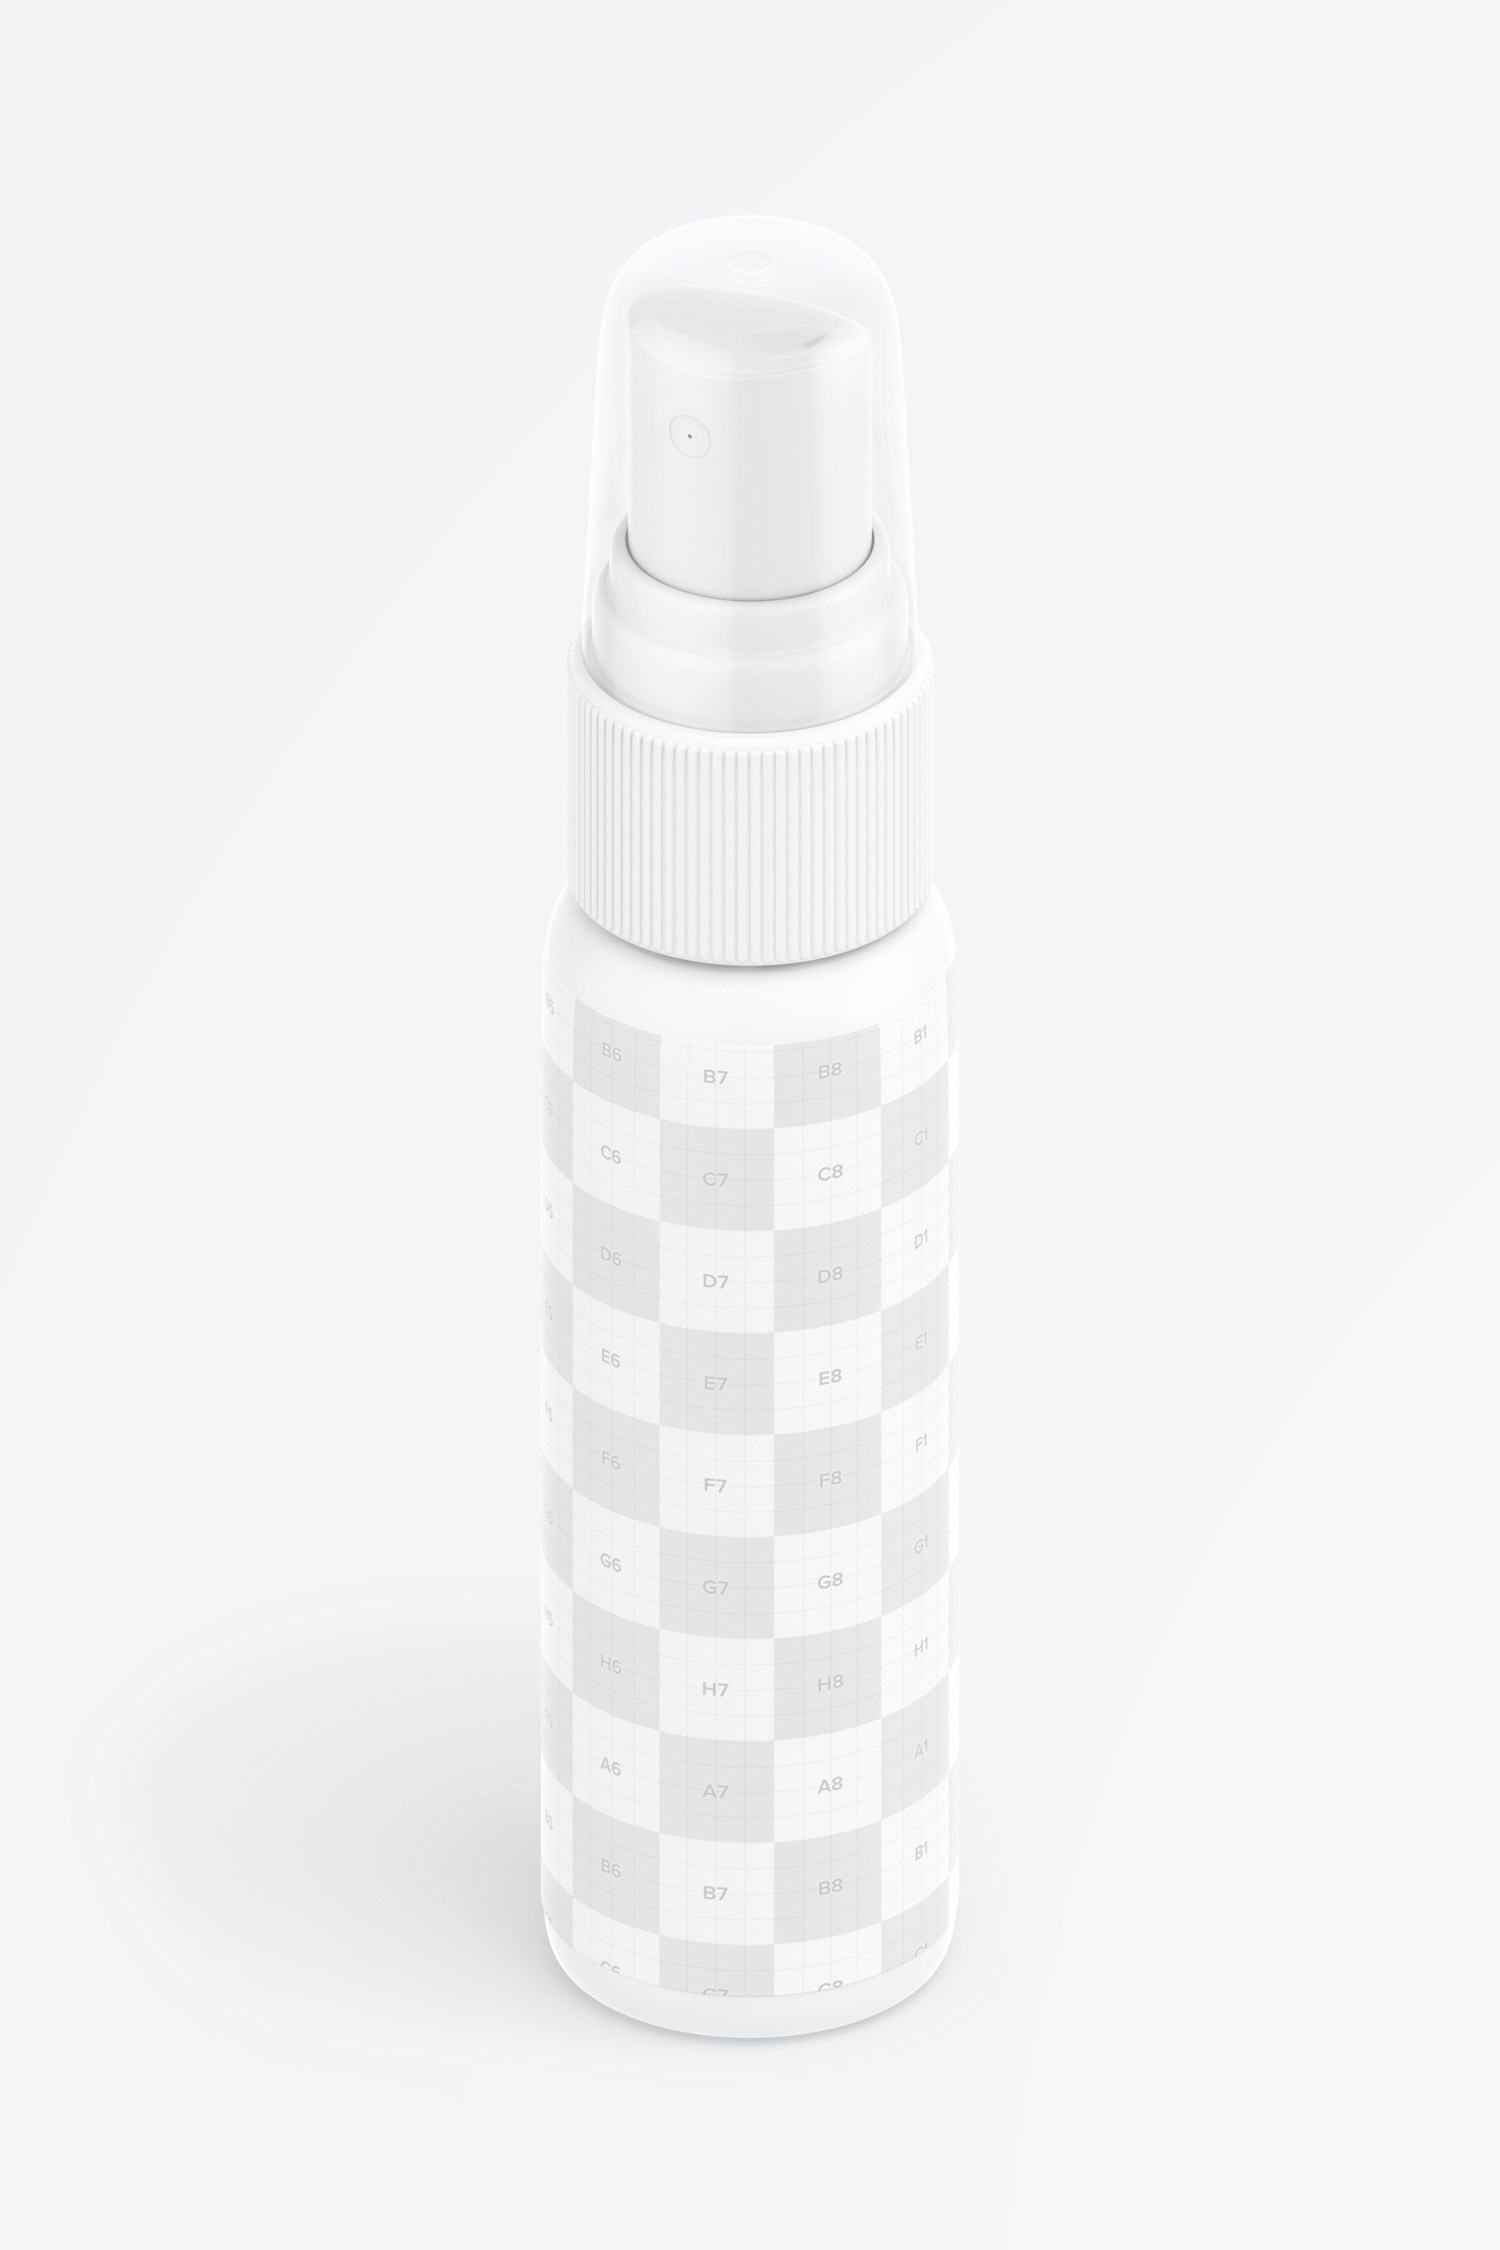 1 oz Spray PET Bottle Mockup, Isometric View